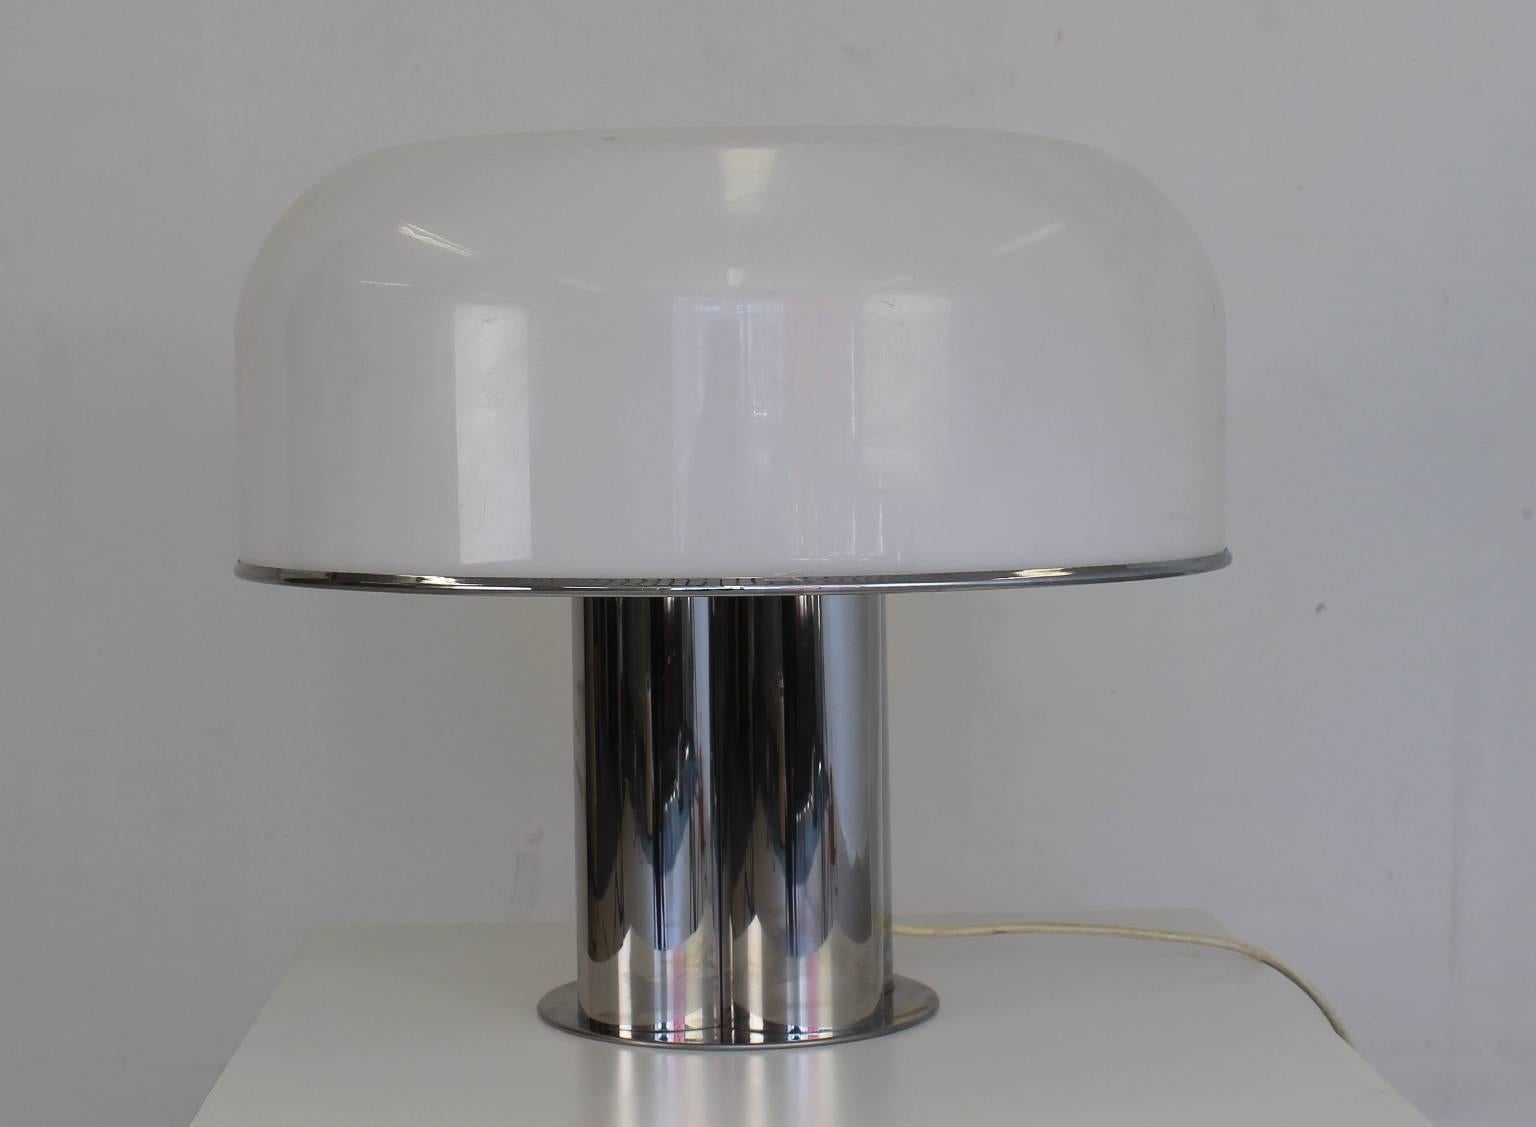 Large Guzzini table lamp.
Chrome base and edge around the hood.
White synthetic hood.